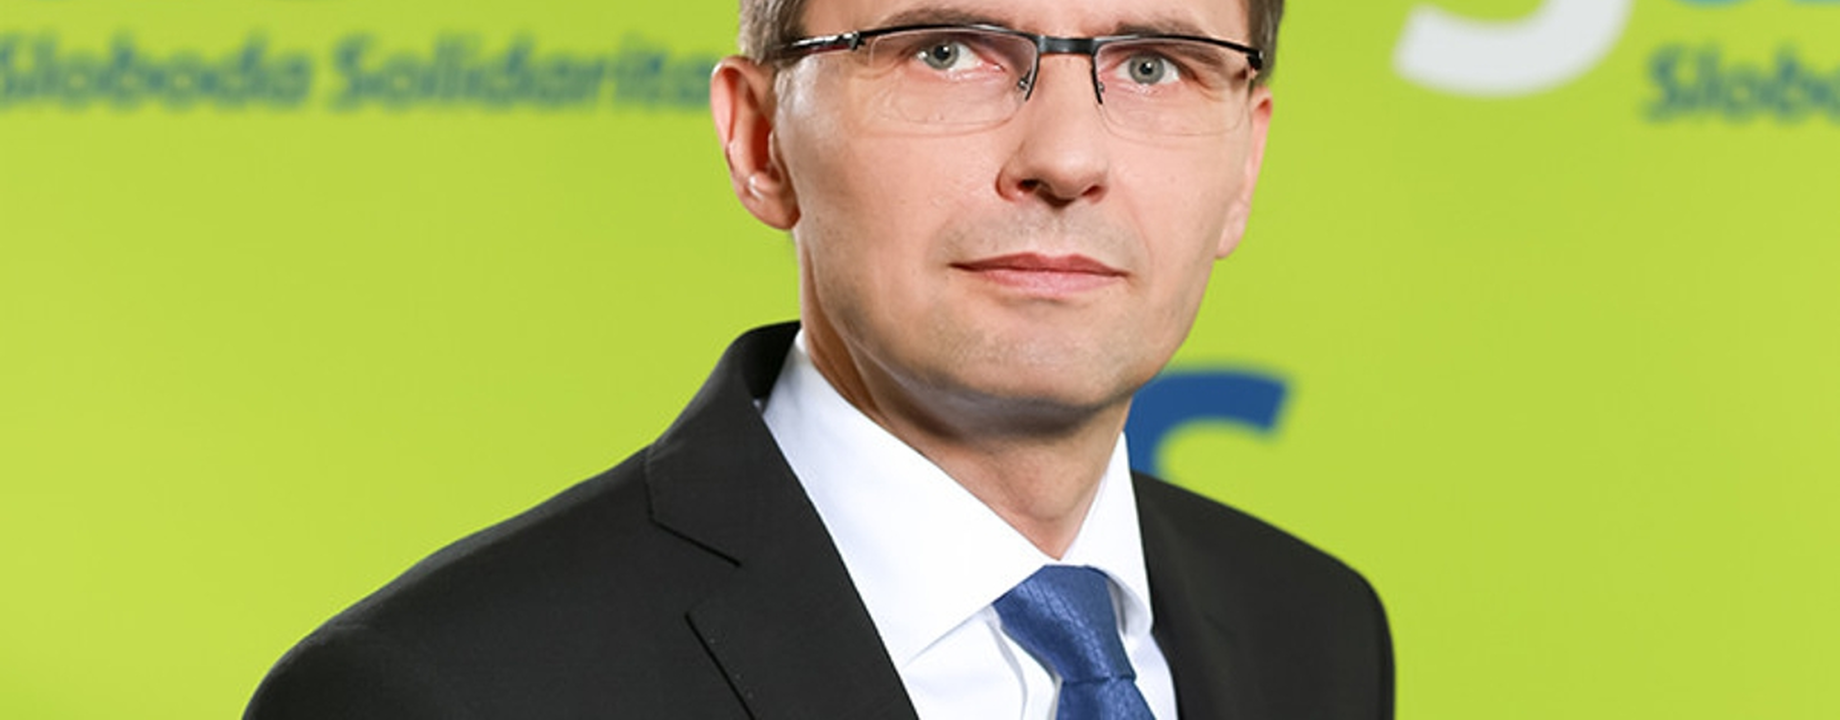 Galko miniszter